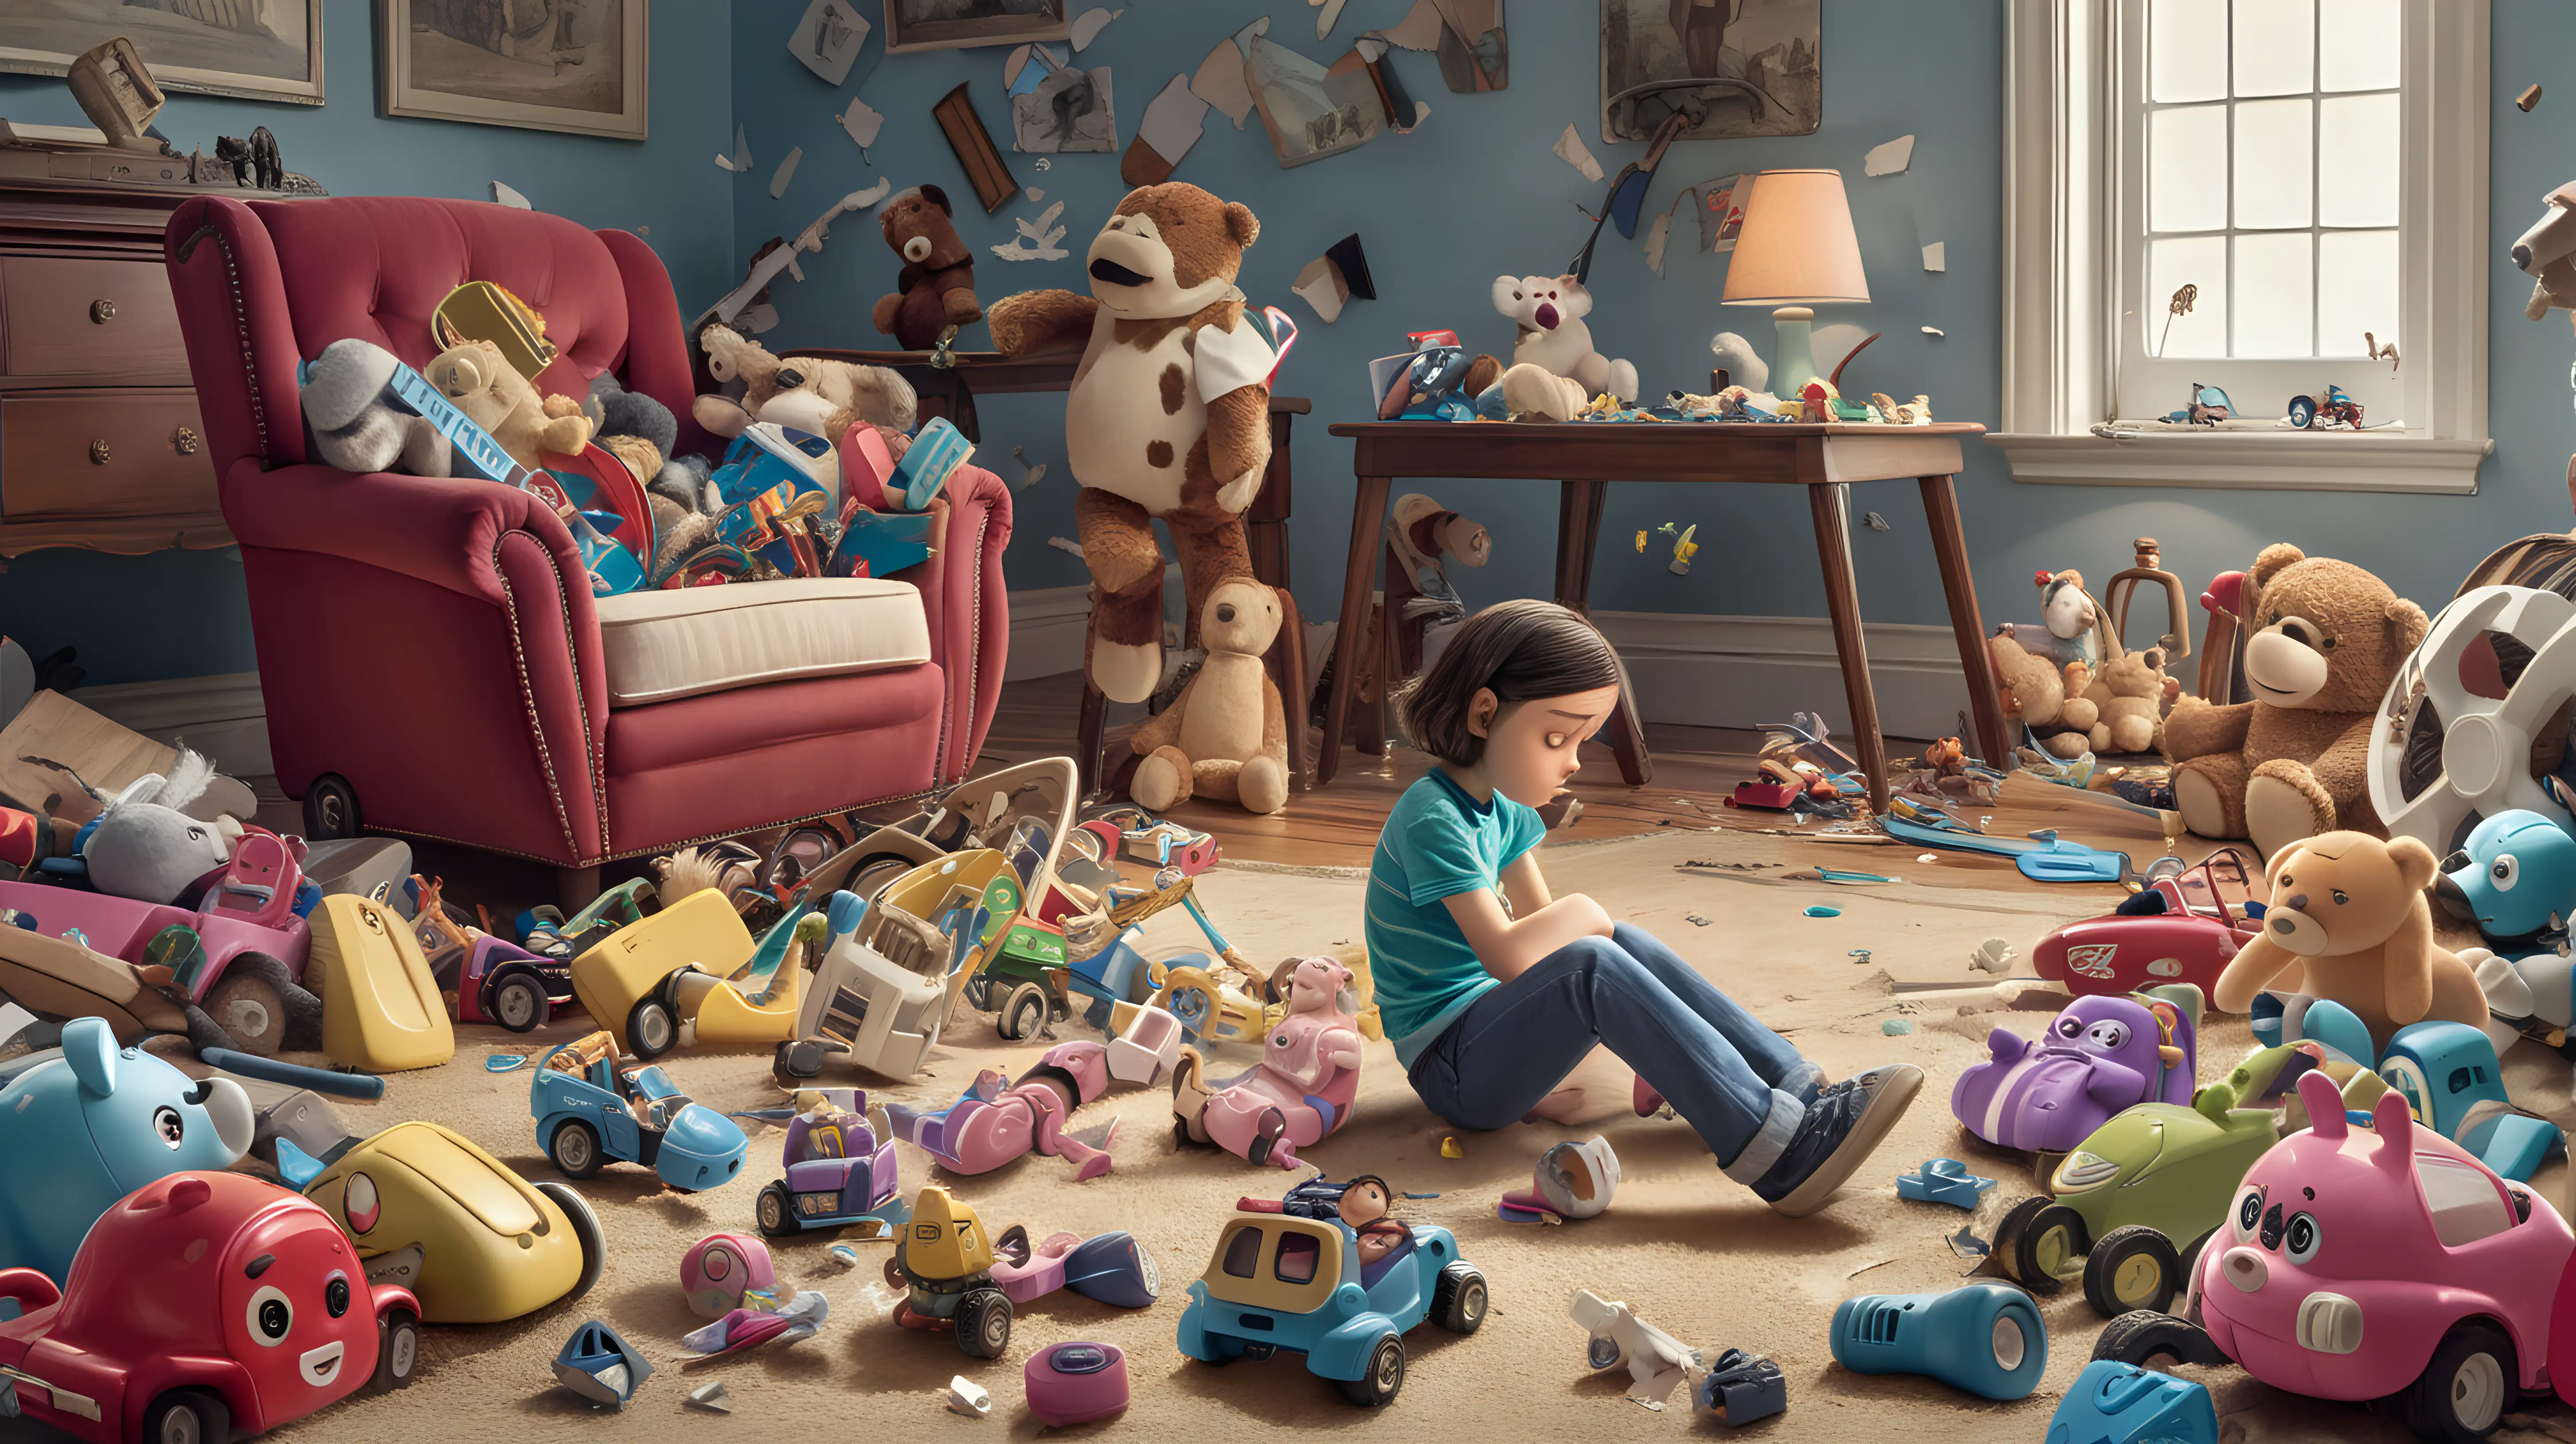 Upset Character Amidst Shattered Toys Emotional Illustration